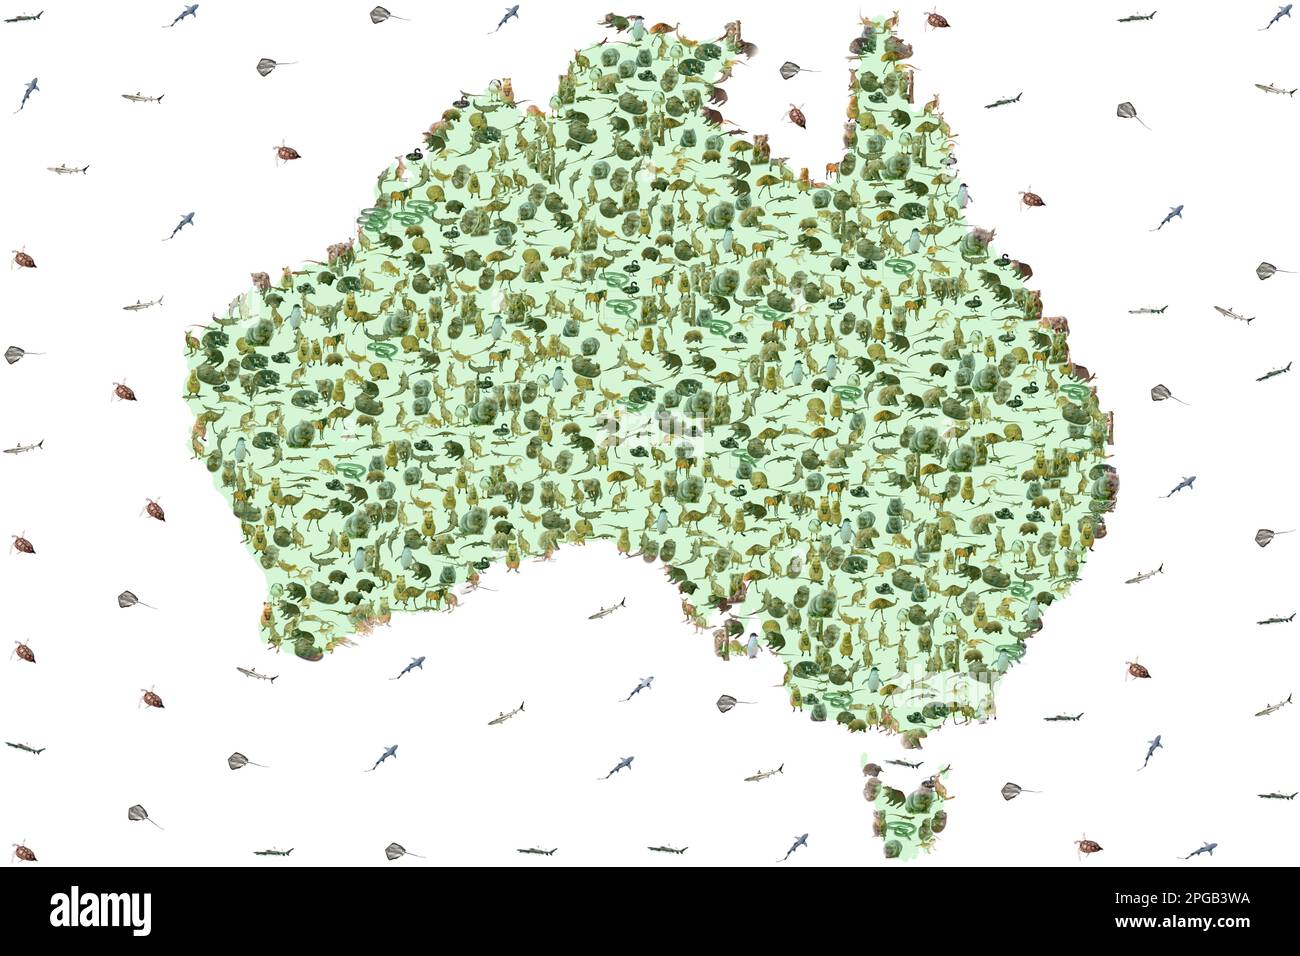 Australian animals in Australian map. Wildlife animals: Emu, Echidna, Tasmanian Devil, Wombat, Kangaroo, Wallaby and Penguin, Ducks, Snakes Lizards Stock Photo